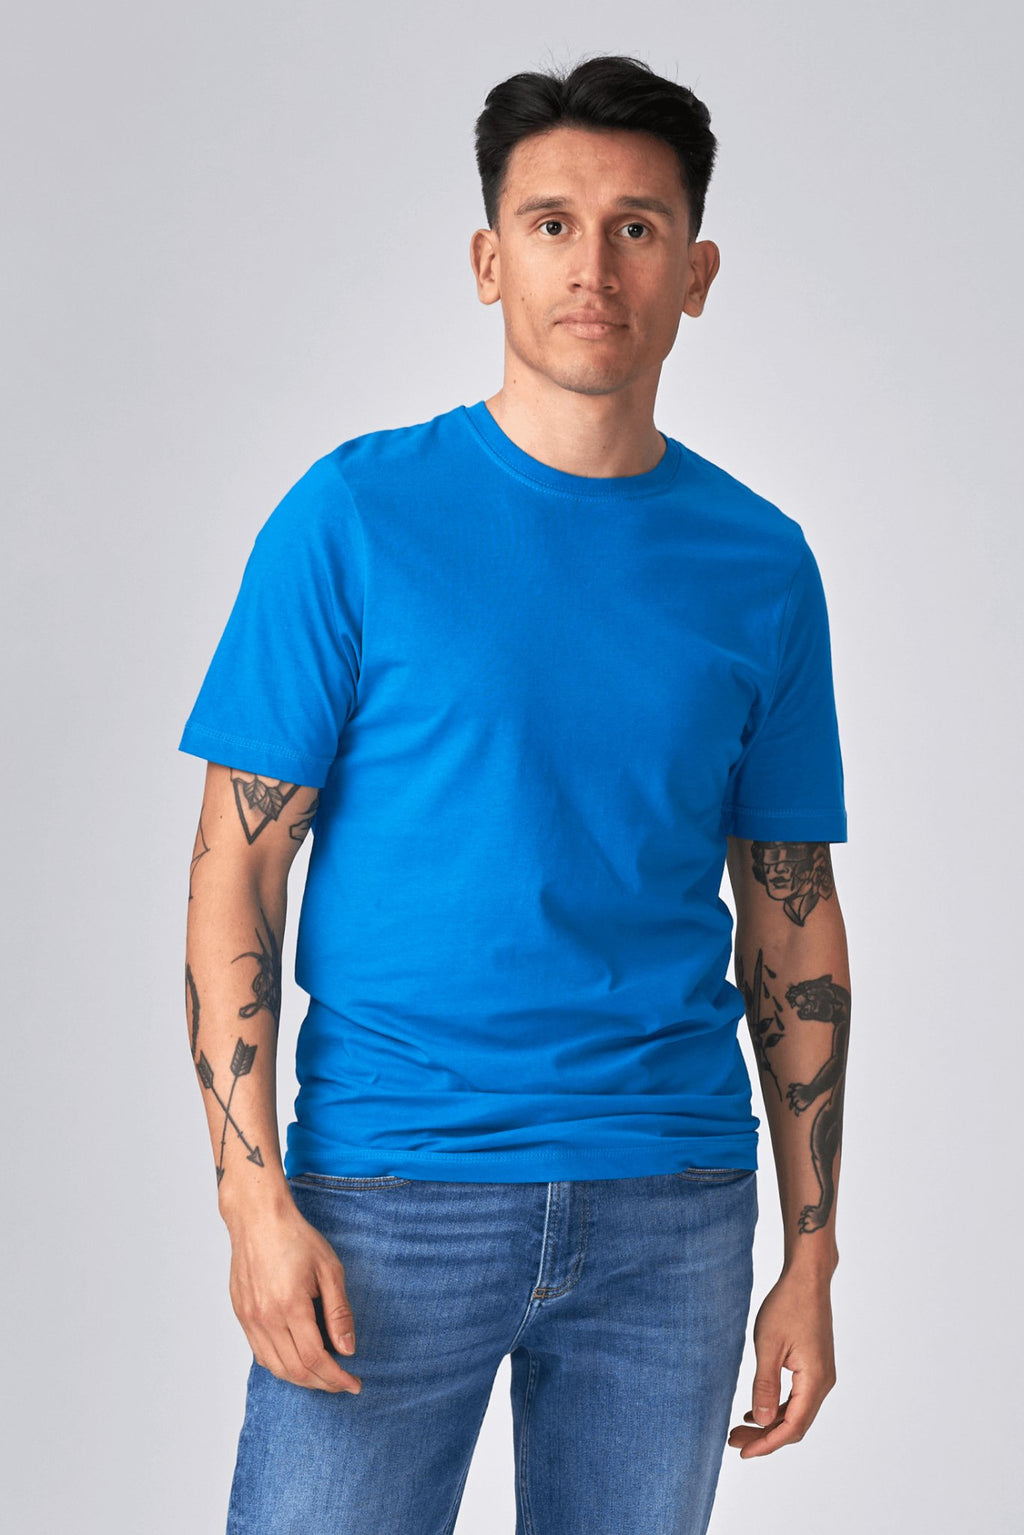 Camiseta básica orgánica - azul turquesa